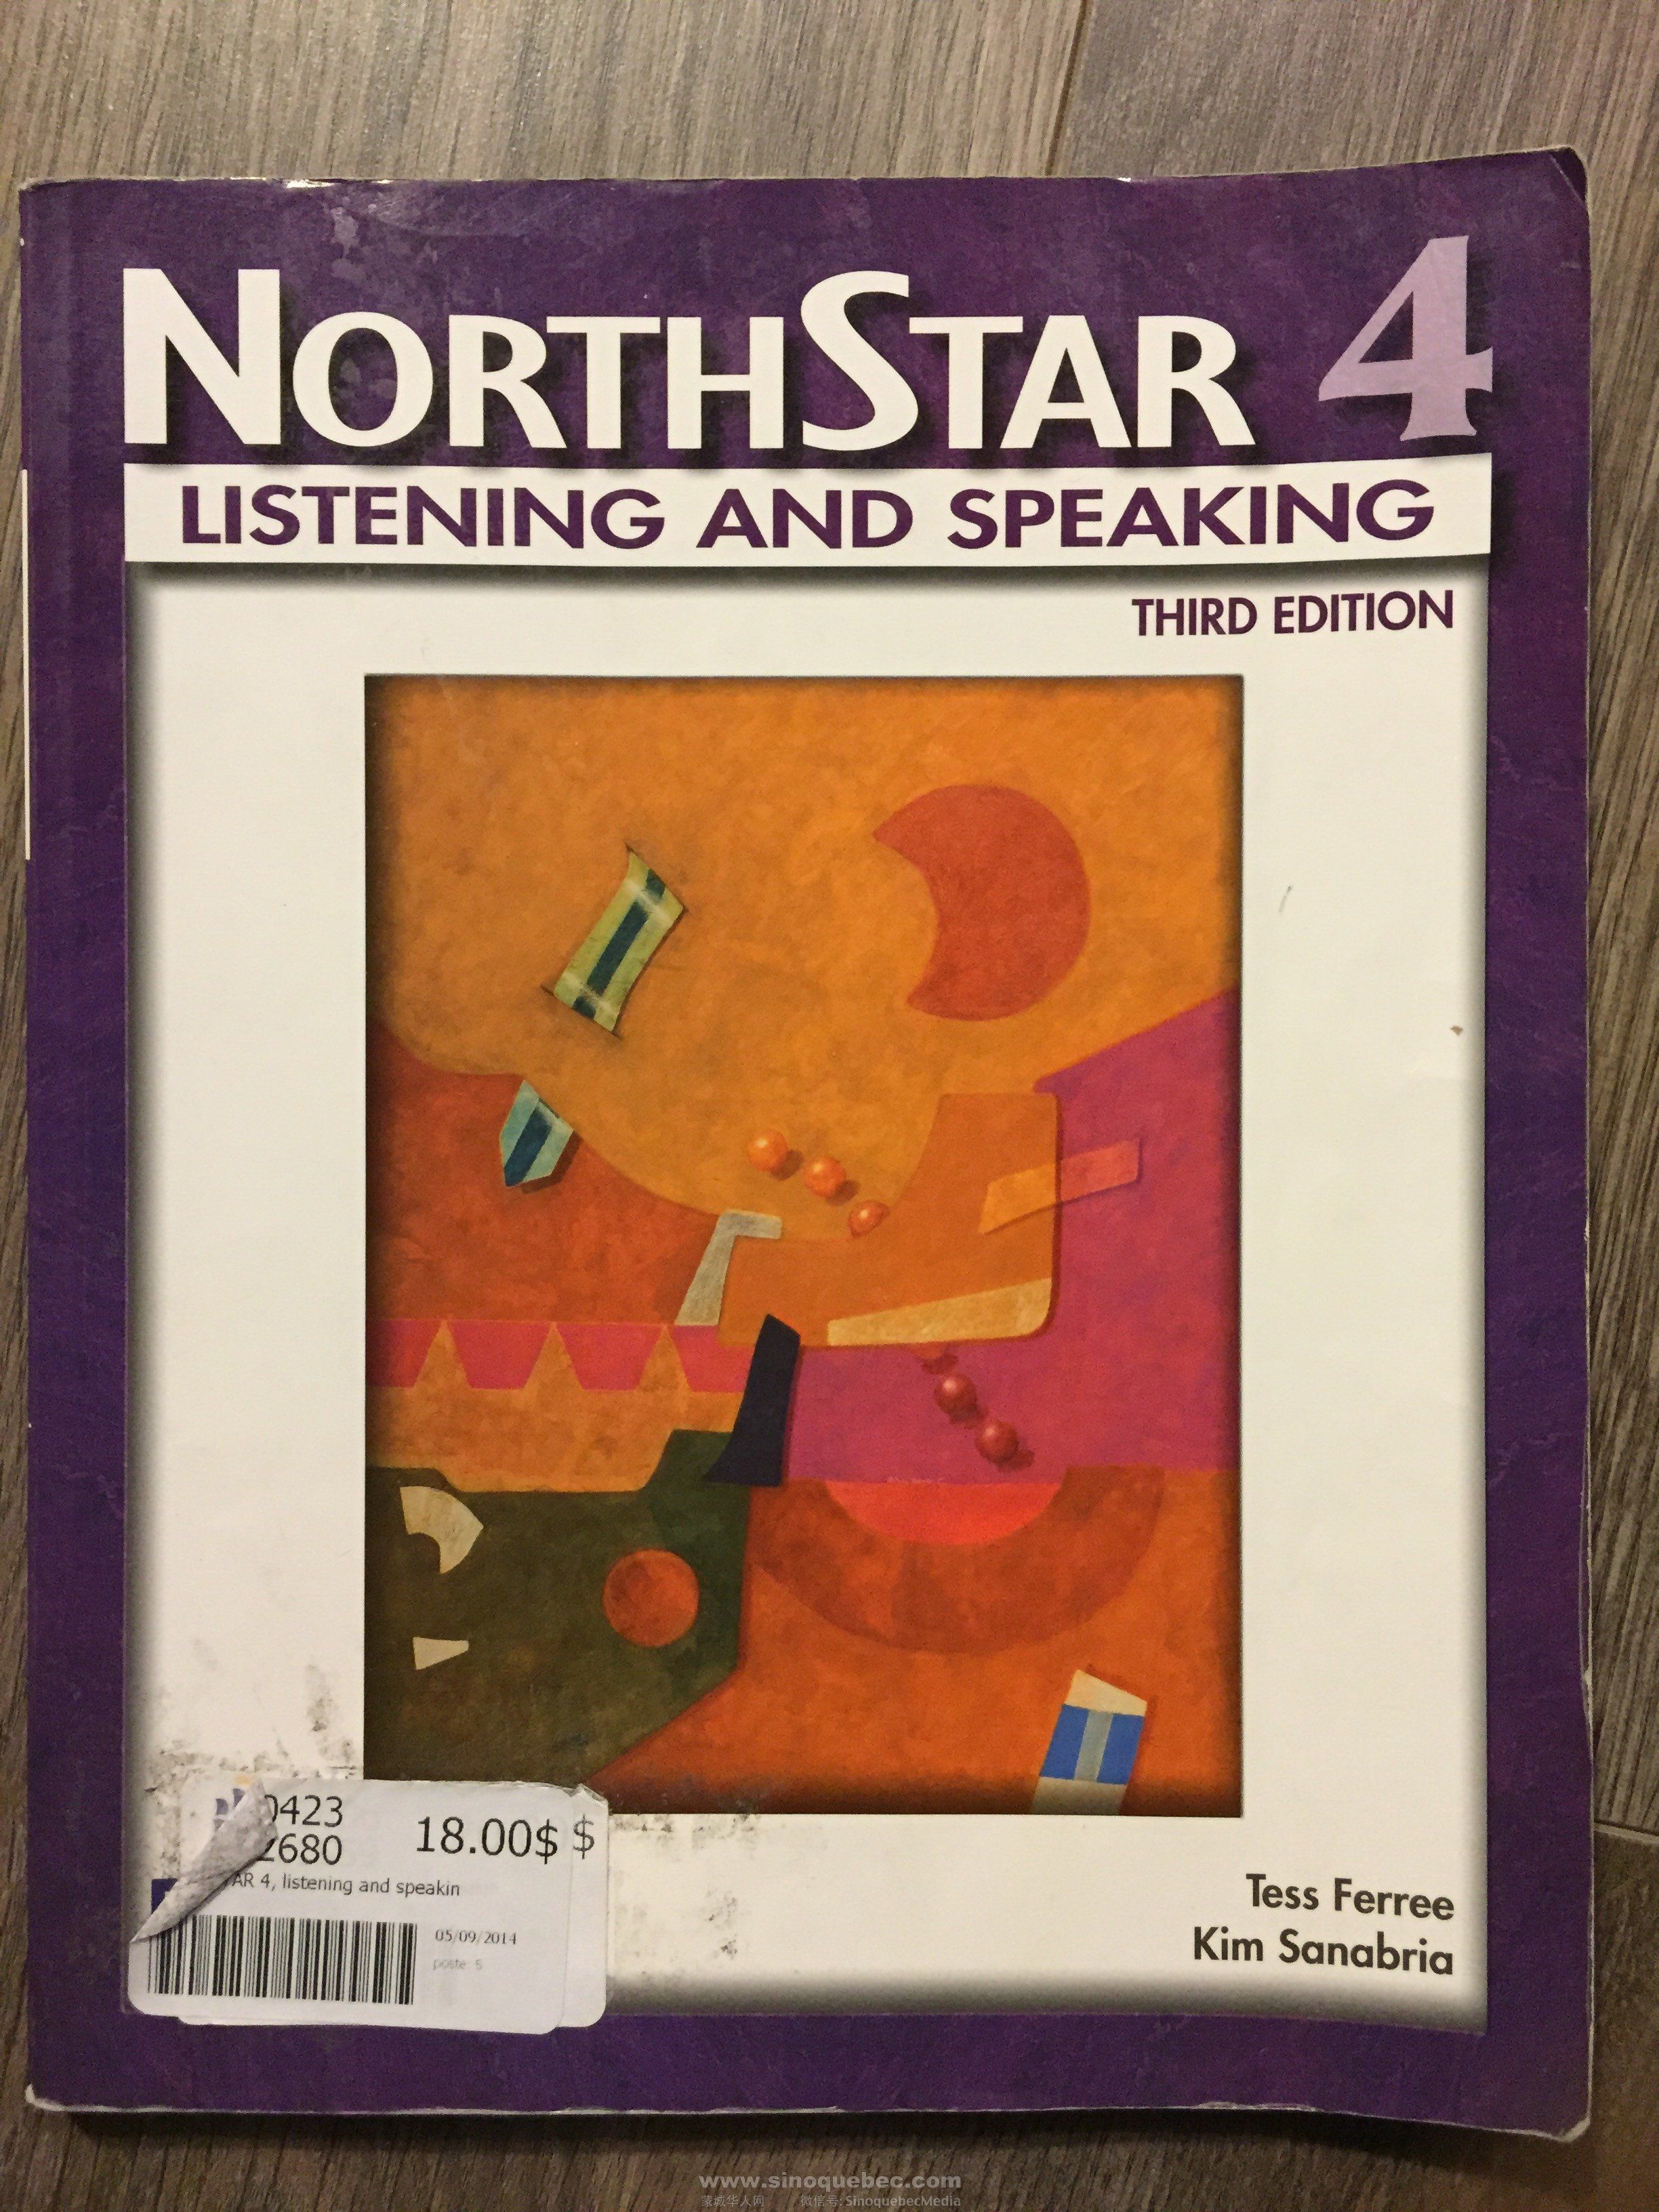 NorthStar 4 listening and speaking